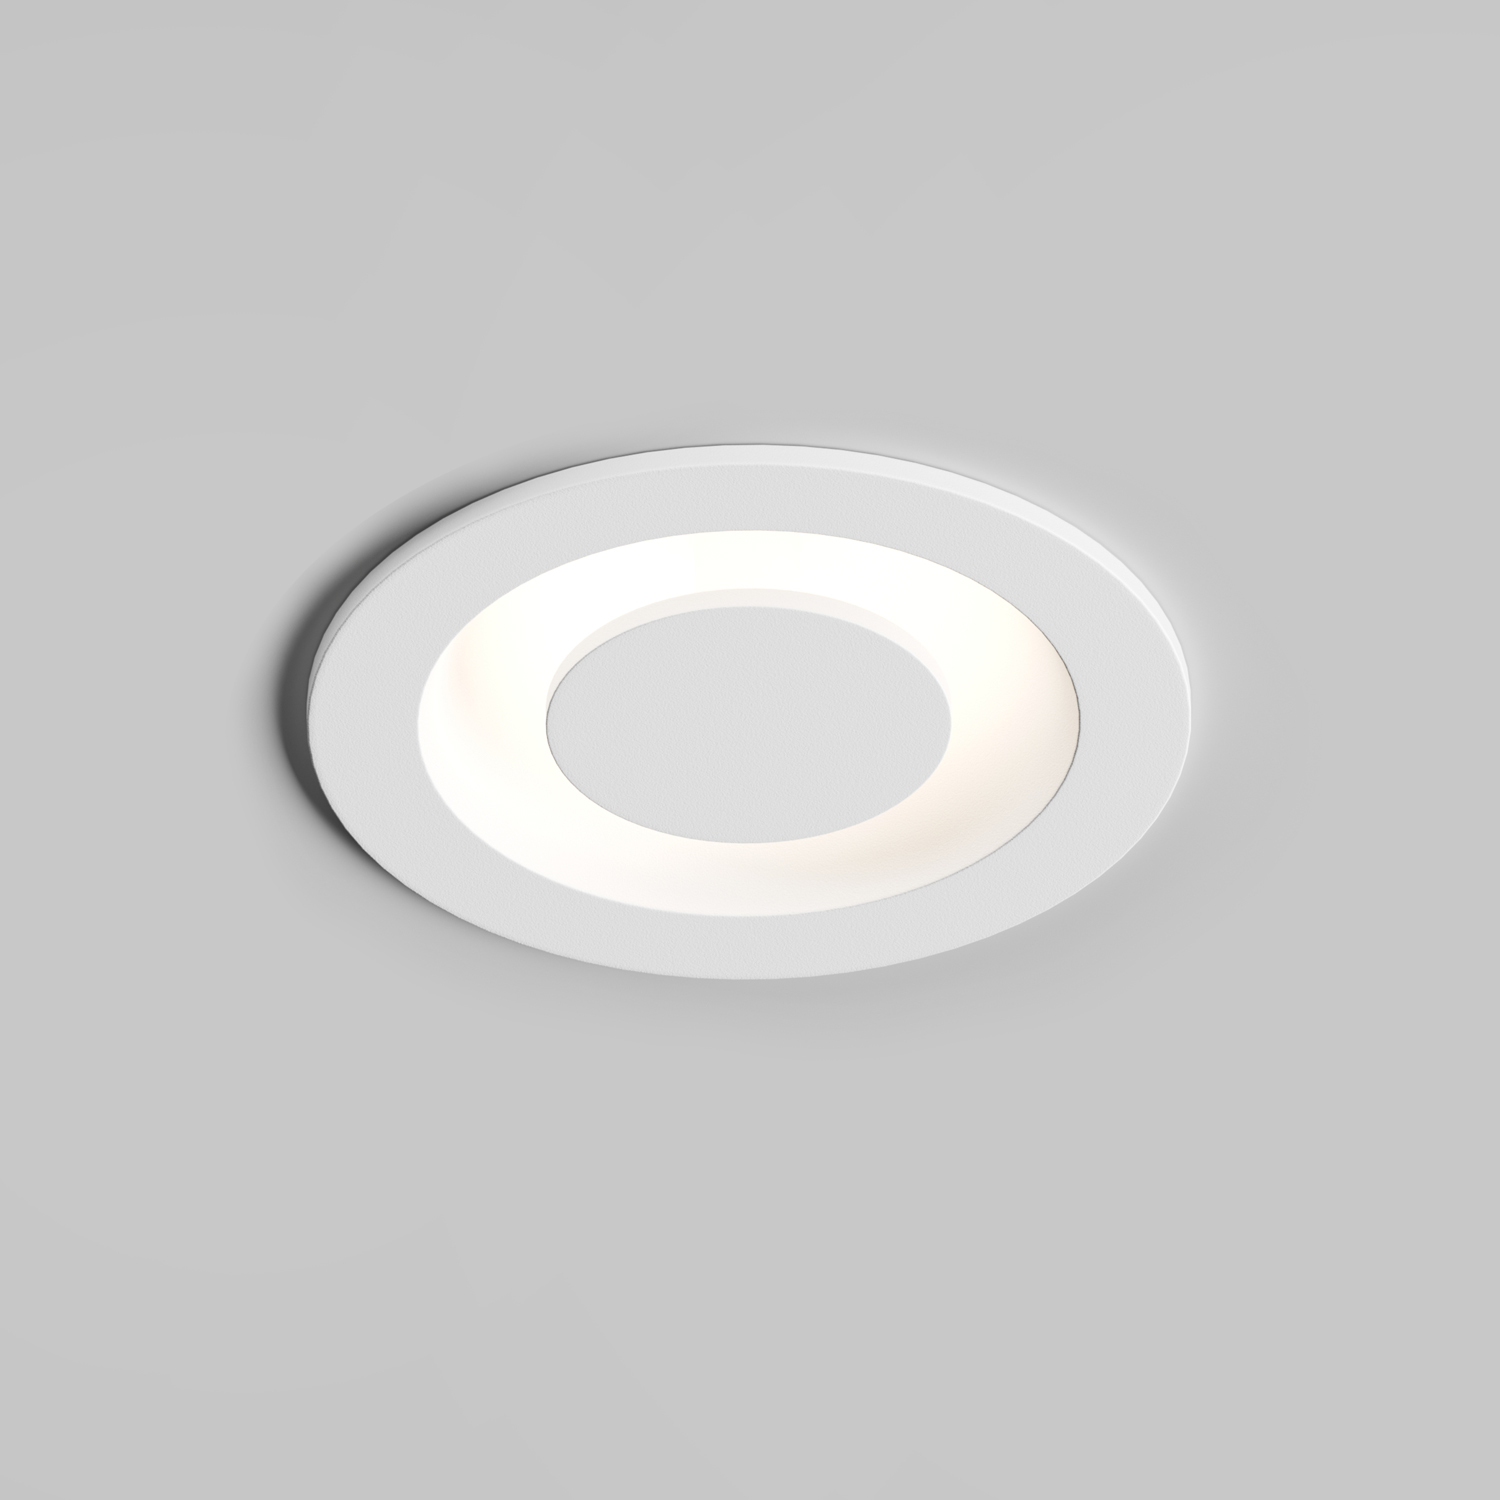 Встраиваемый светильник LED 3000 белый алюминий Denkirs DK2500-WH DK2500-WH